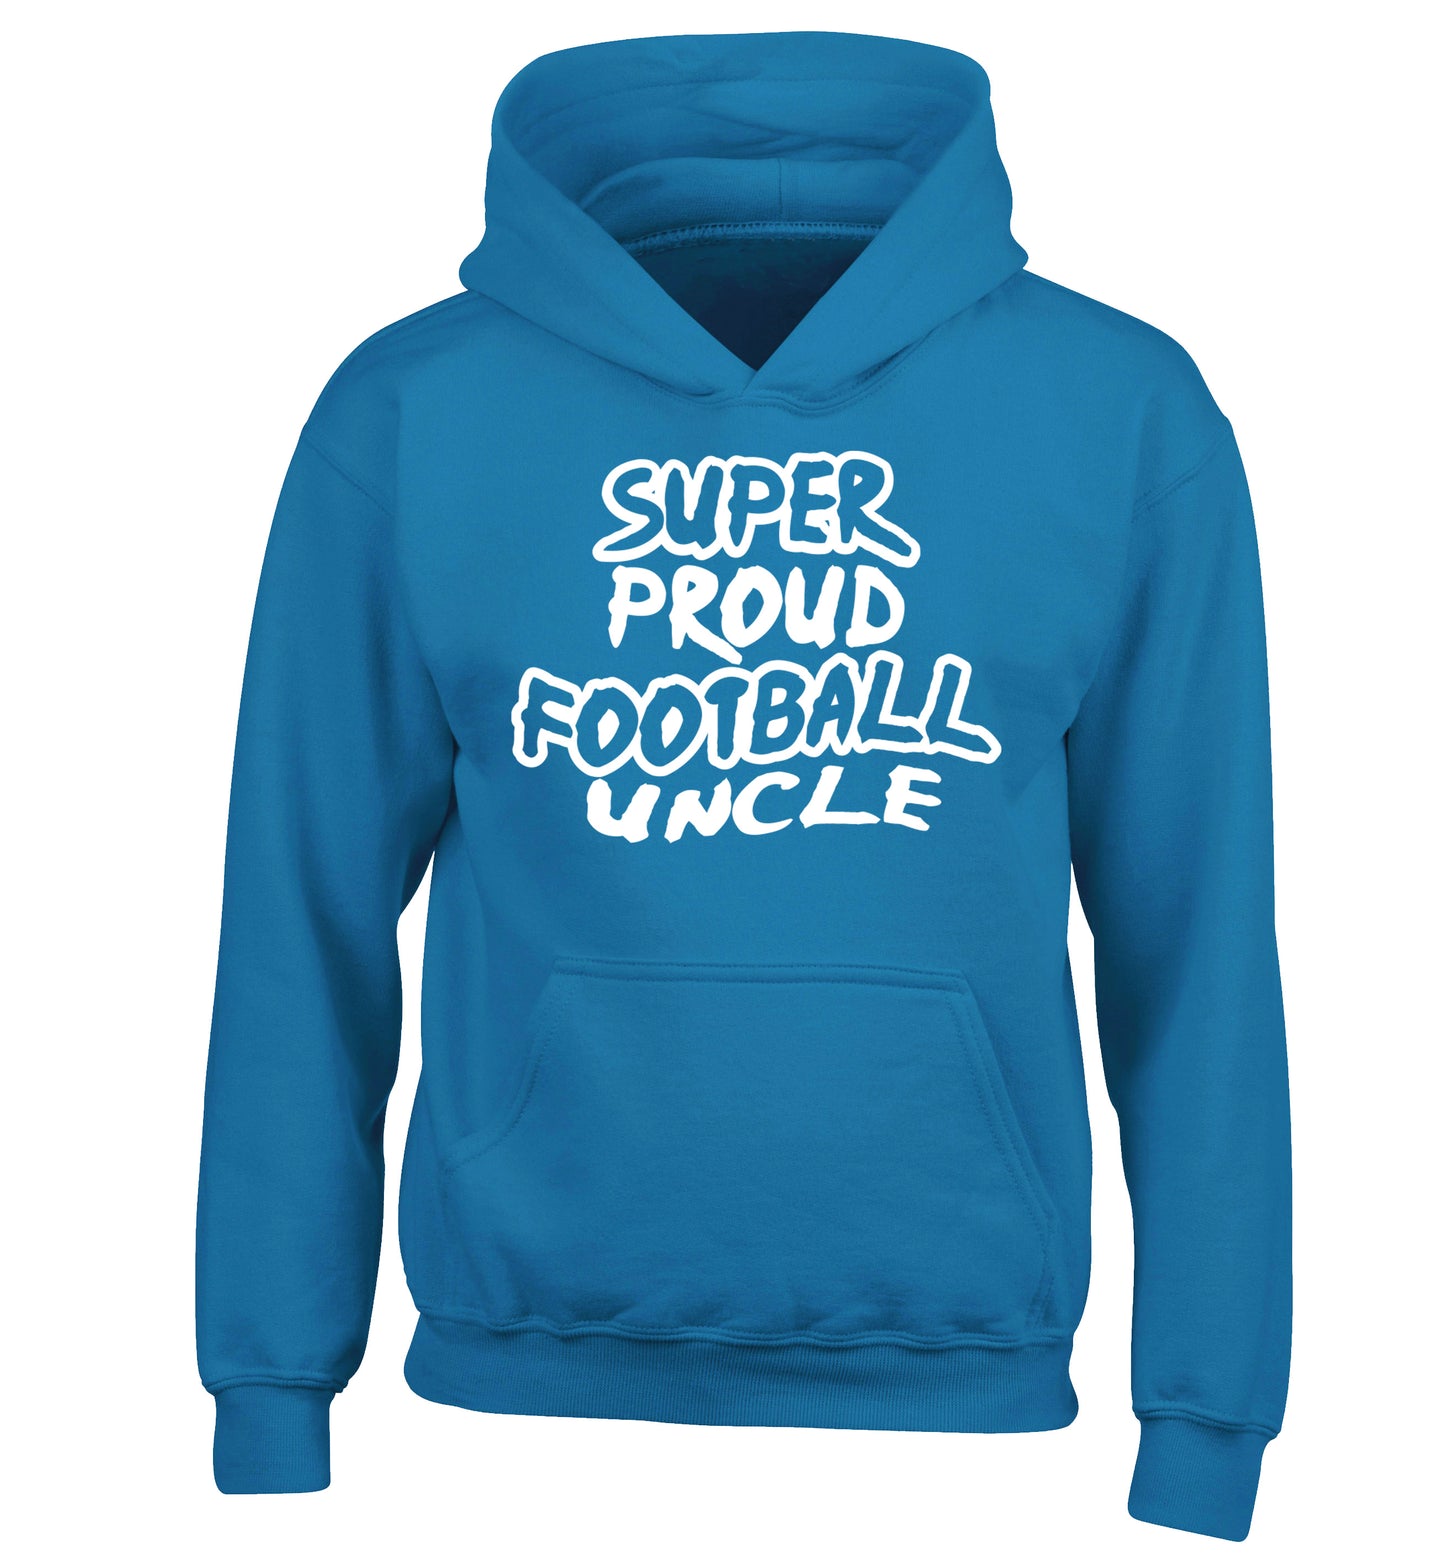 Super proud football uncle children's blue hoodie 12-14 Years